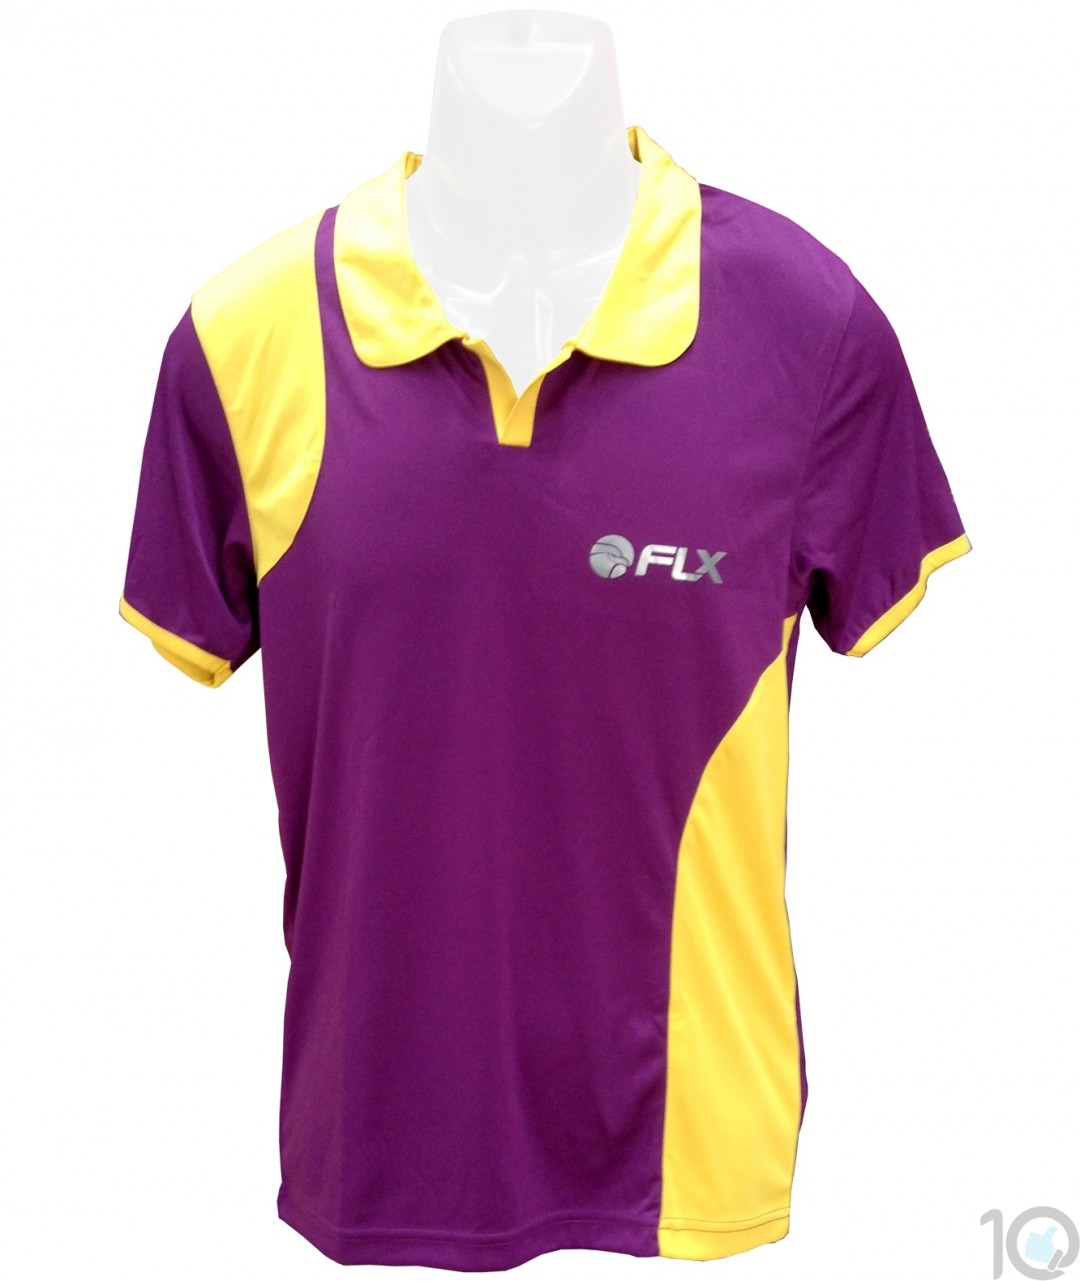 cricket jersey order online